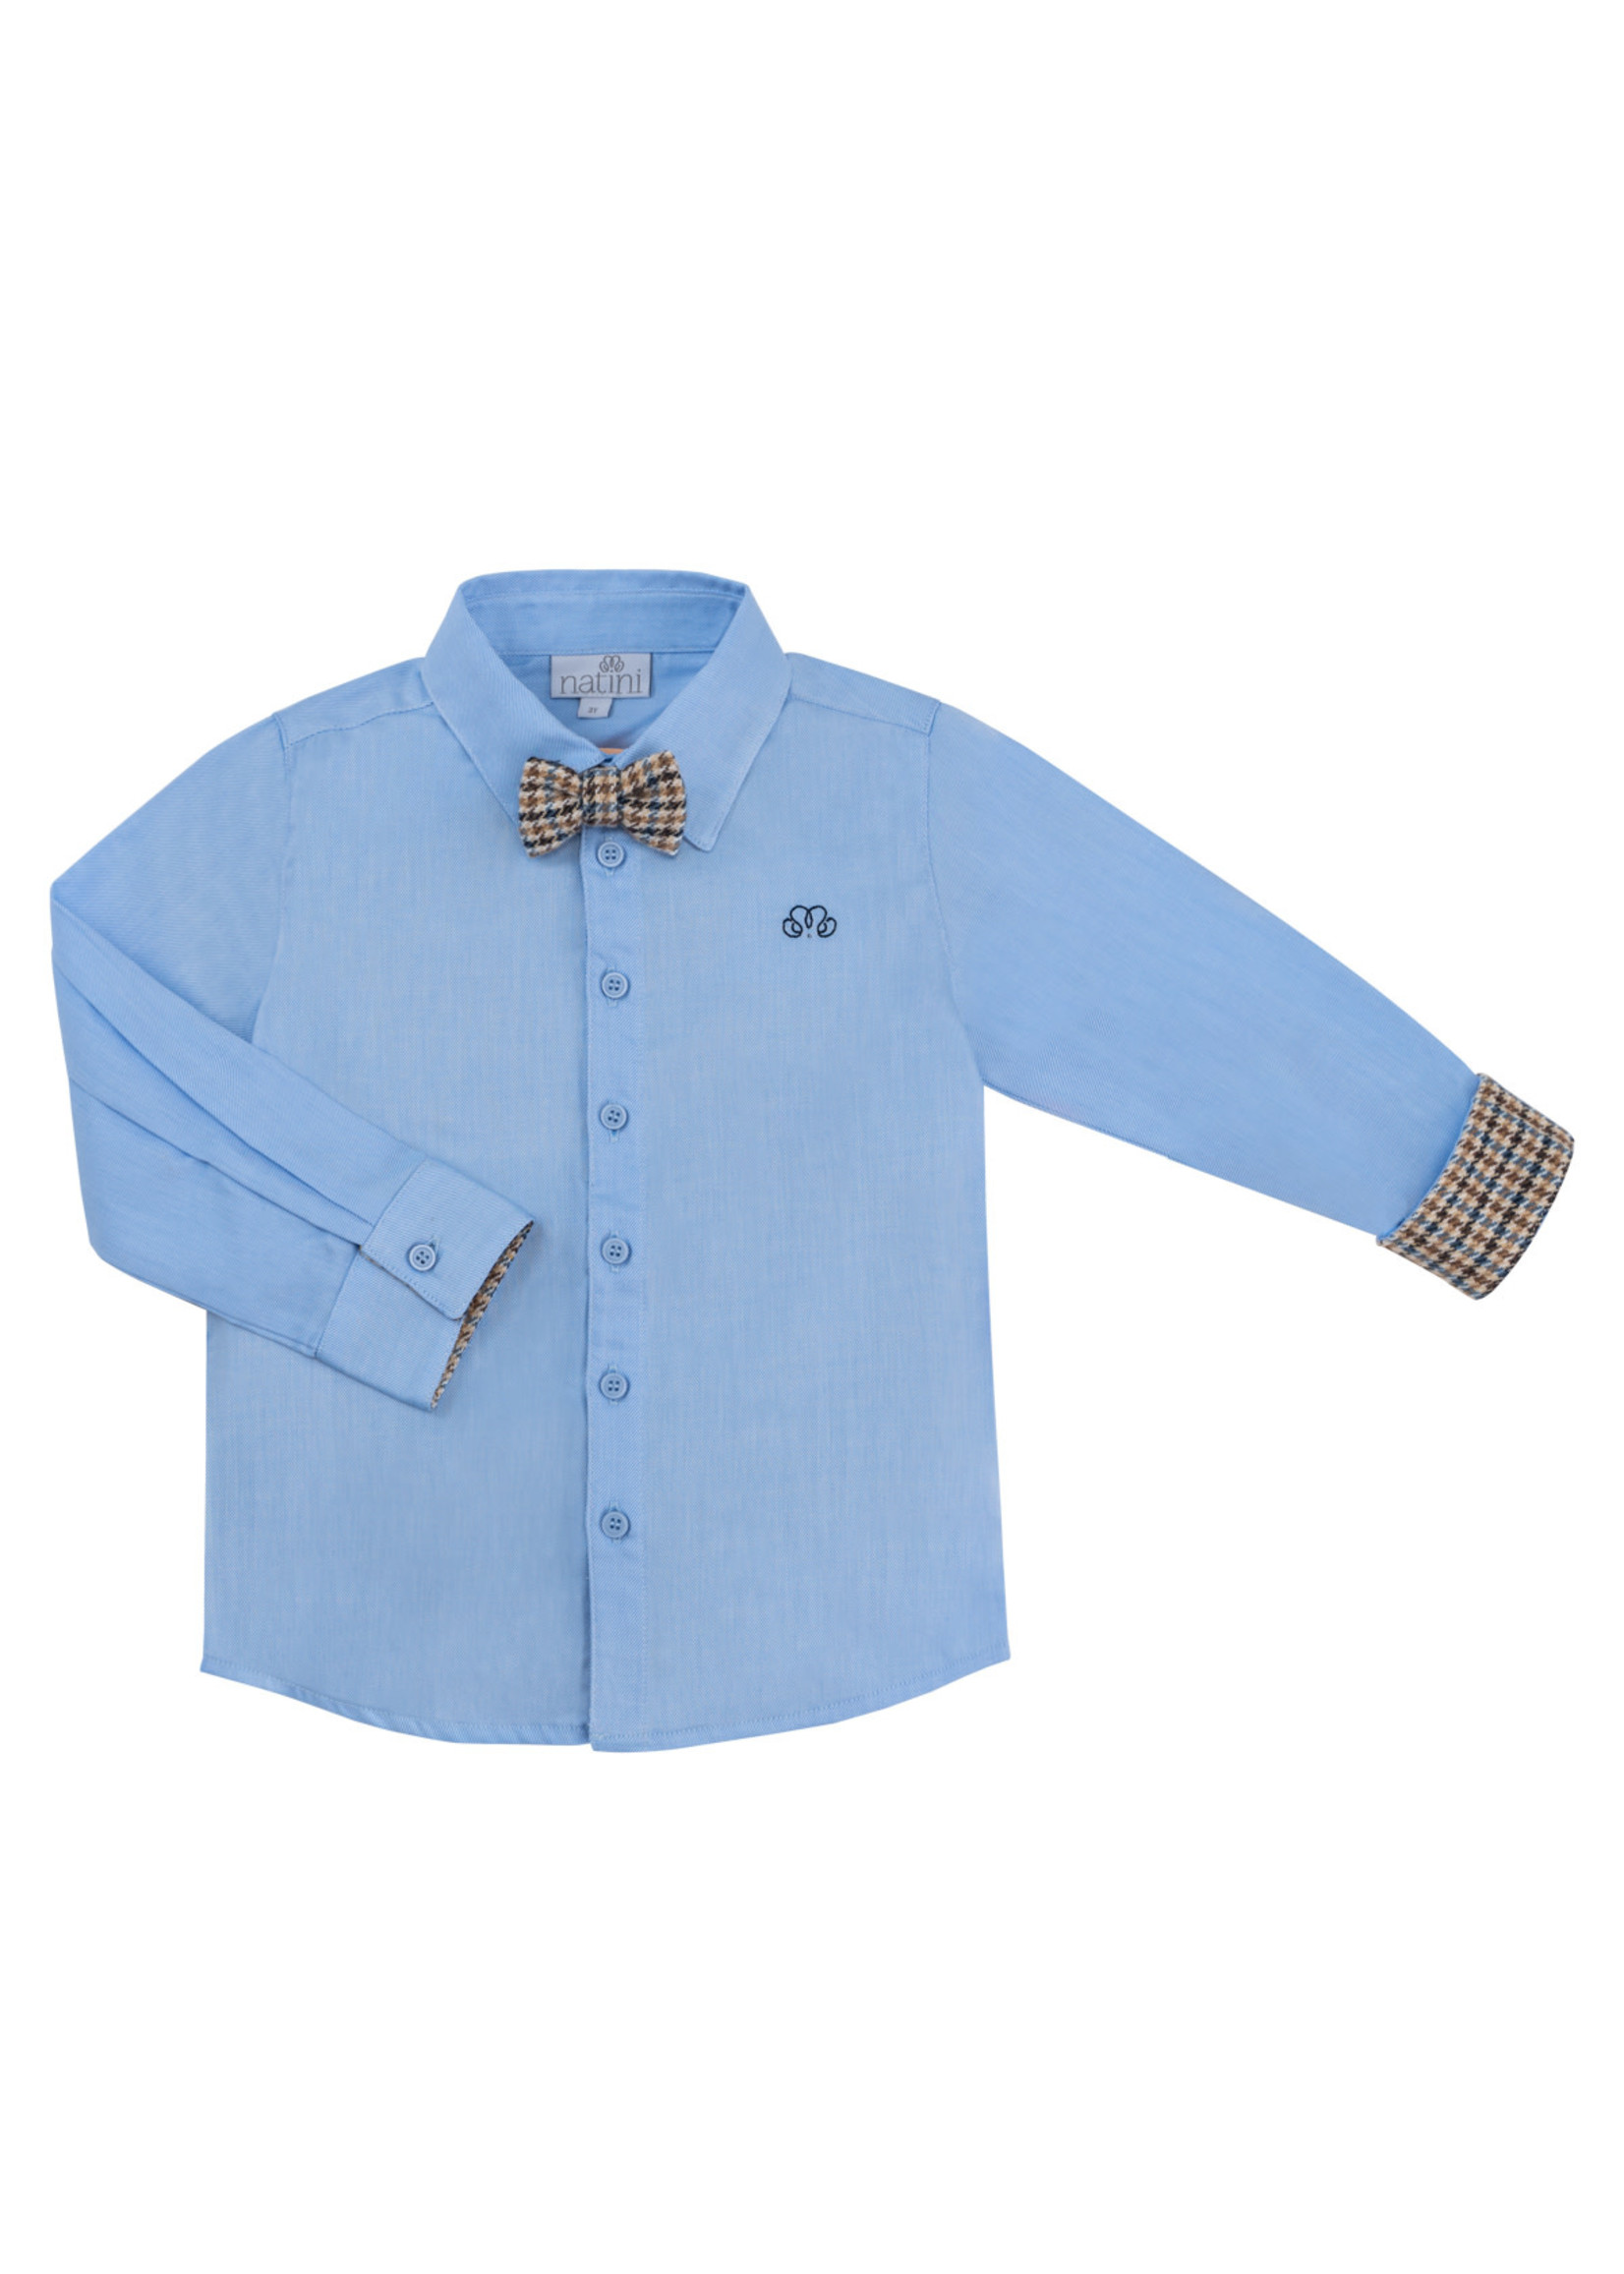 Natini Natini shirt pierrot bow vichy blue beige - 1221 10037 4006